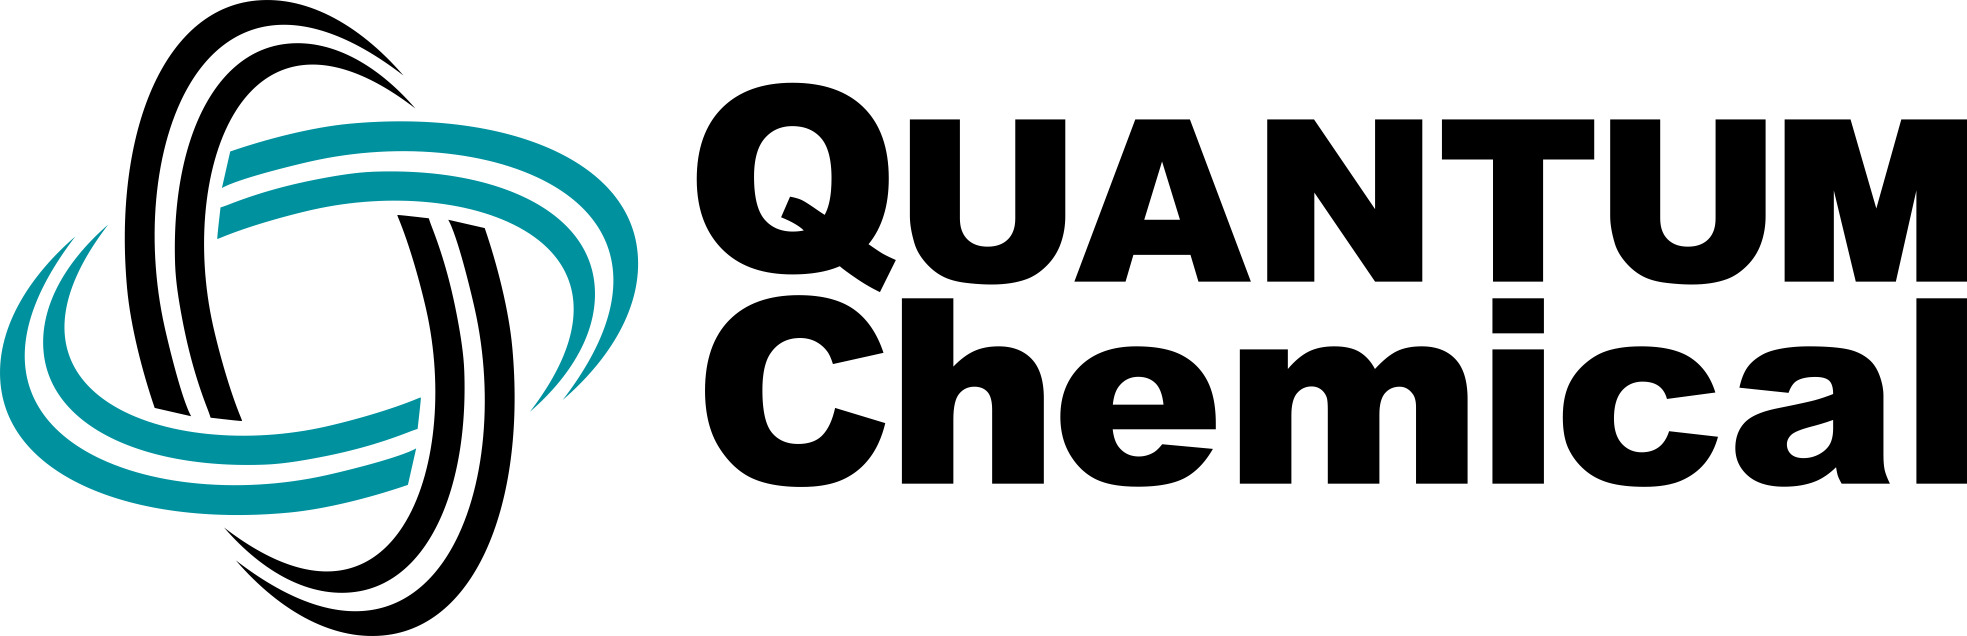 quantum-chemical-logo-bmp.jpg